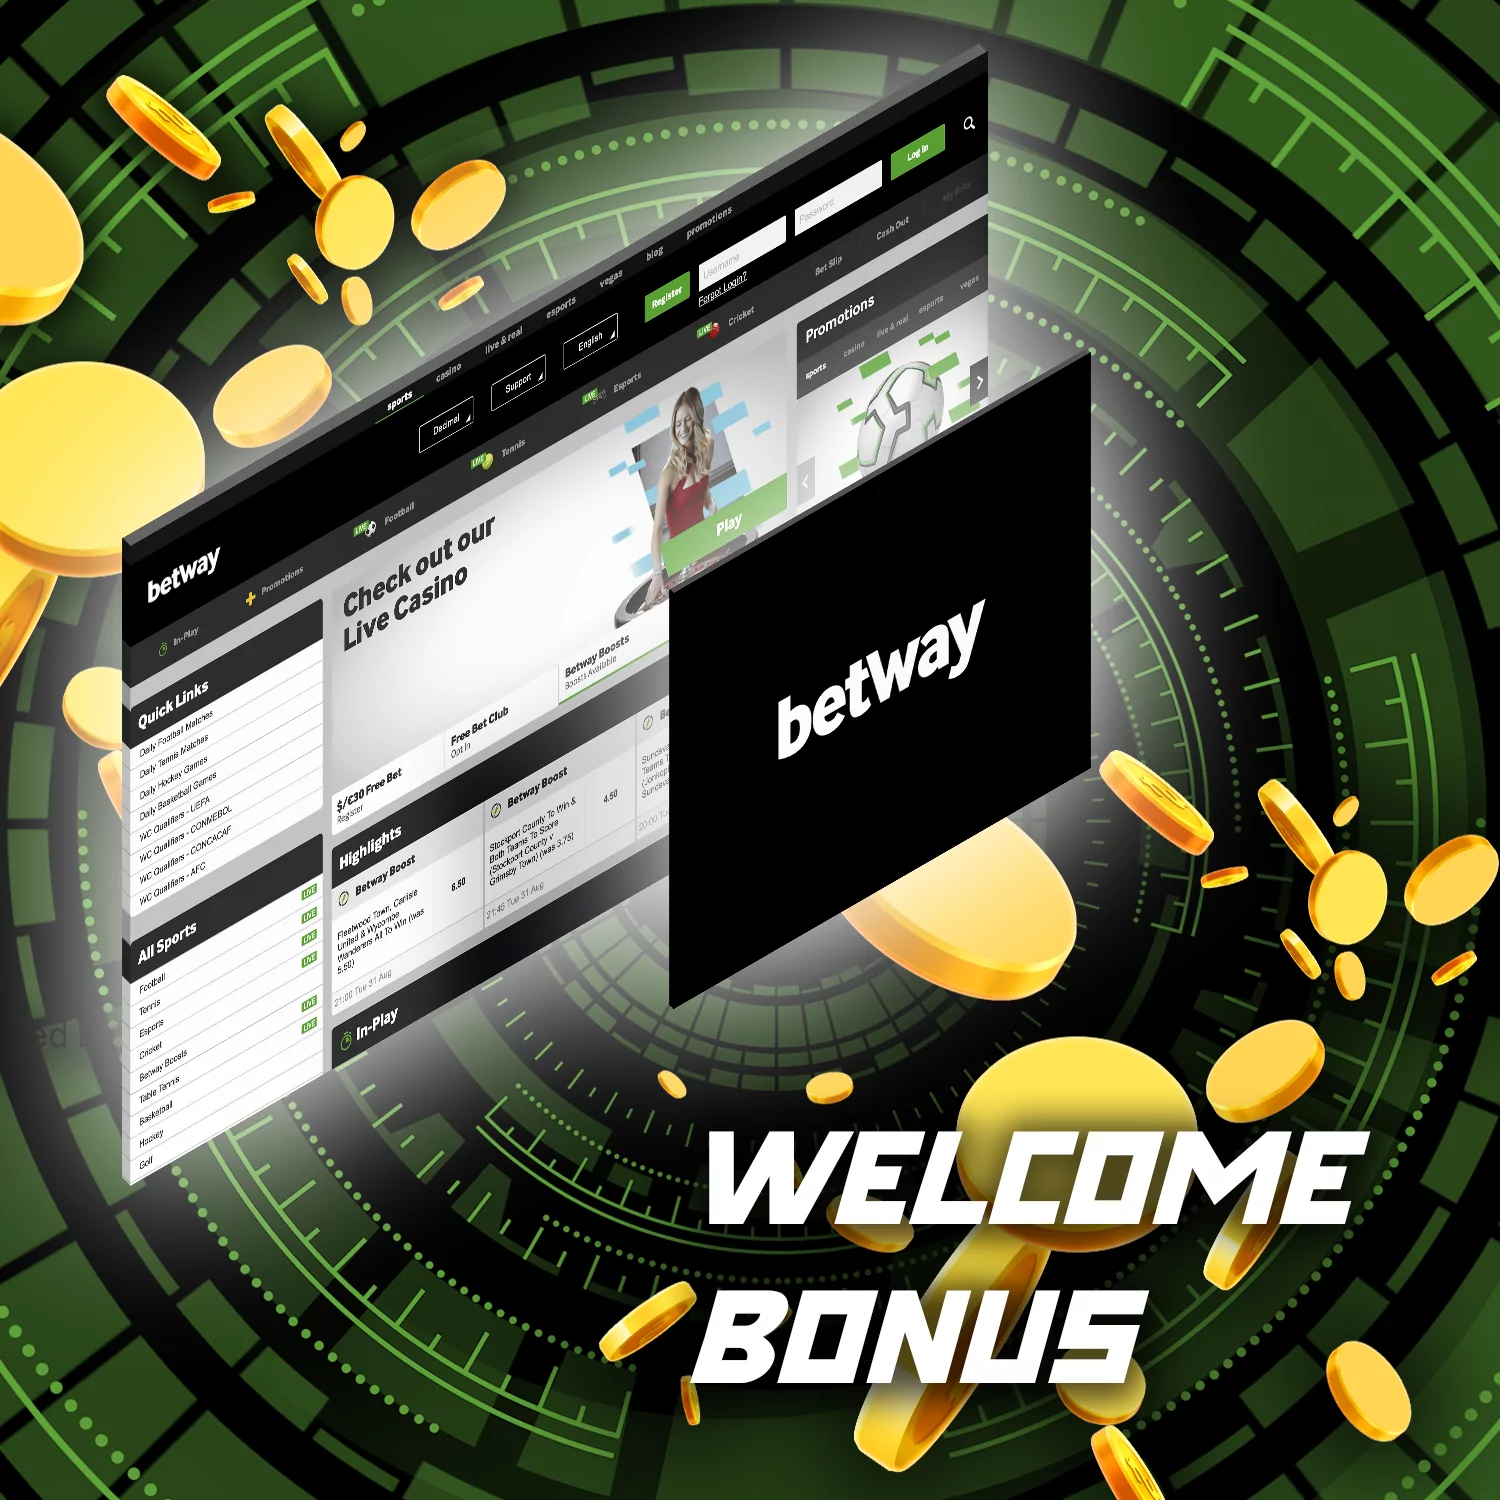 Betway maximum welcome bonus is INR 2,500.